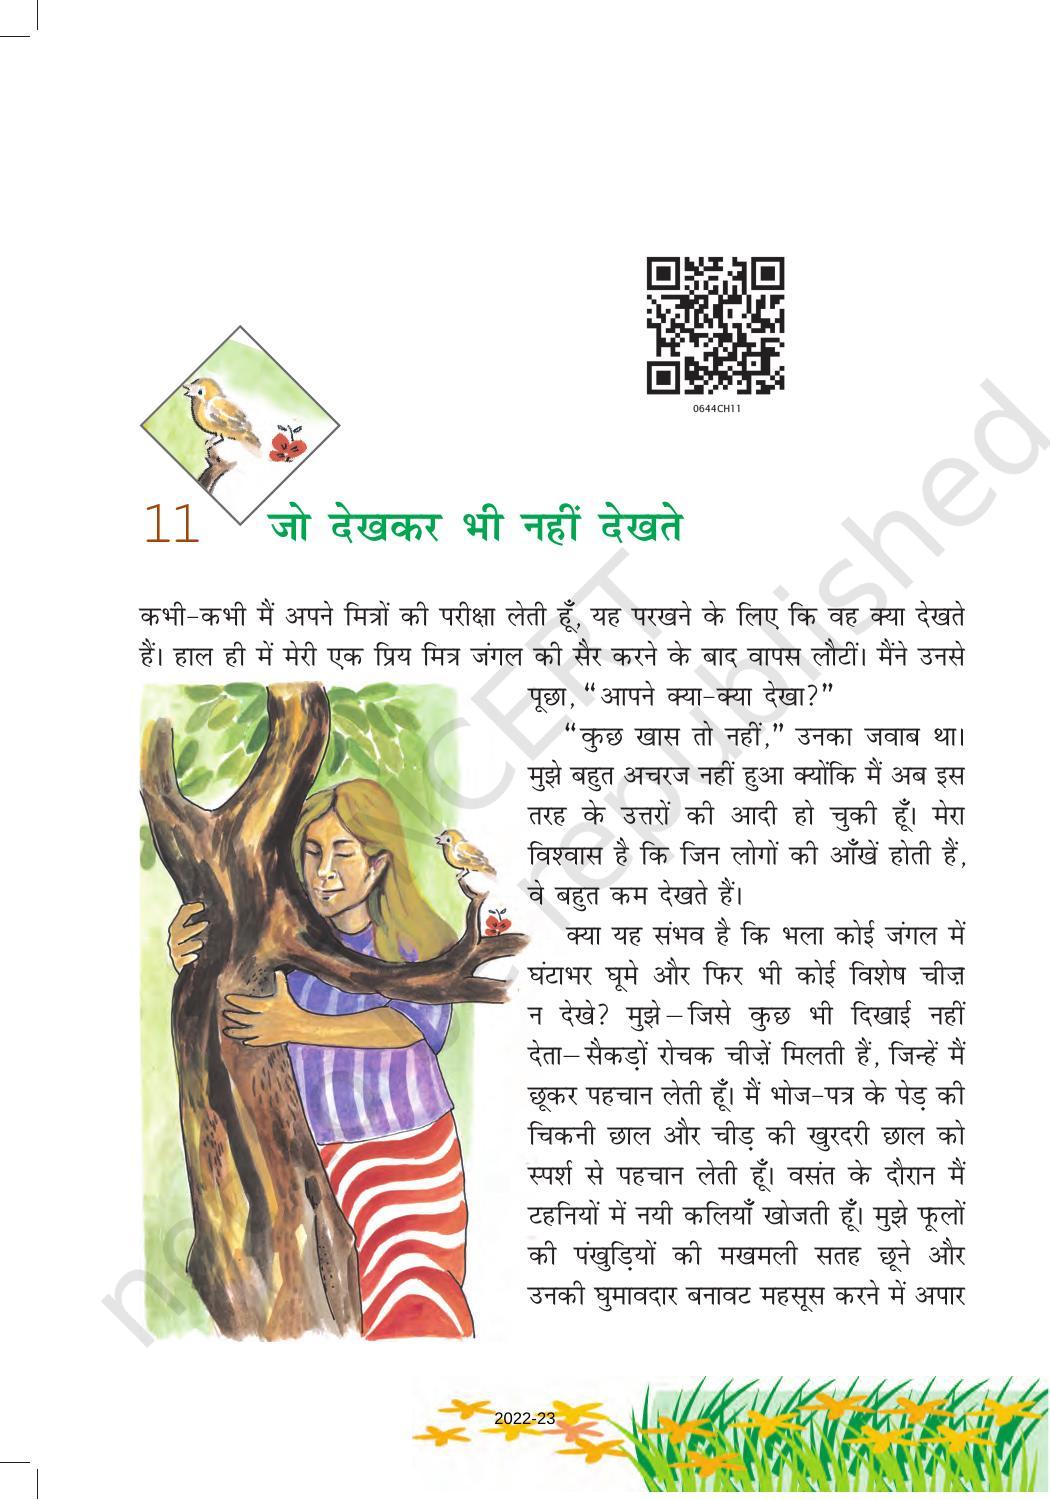 NCERT Book for Class 6 Hindi(Vasant Bhag 1) : Chapter 11-जो देखकर भी नहीं देखते - Page 1